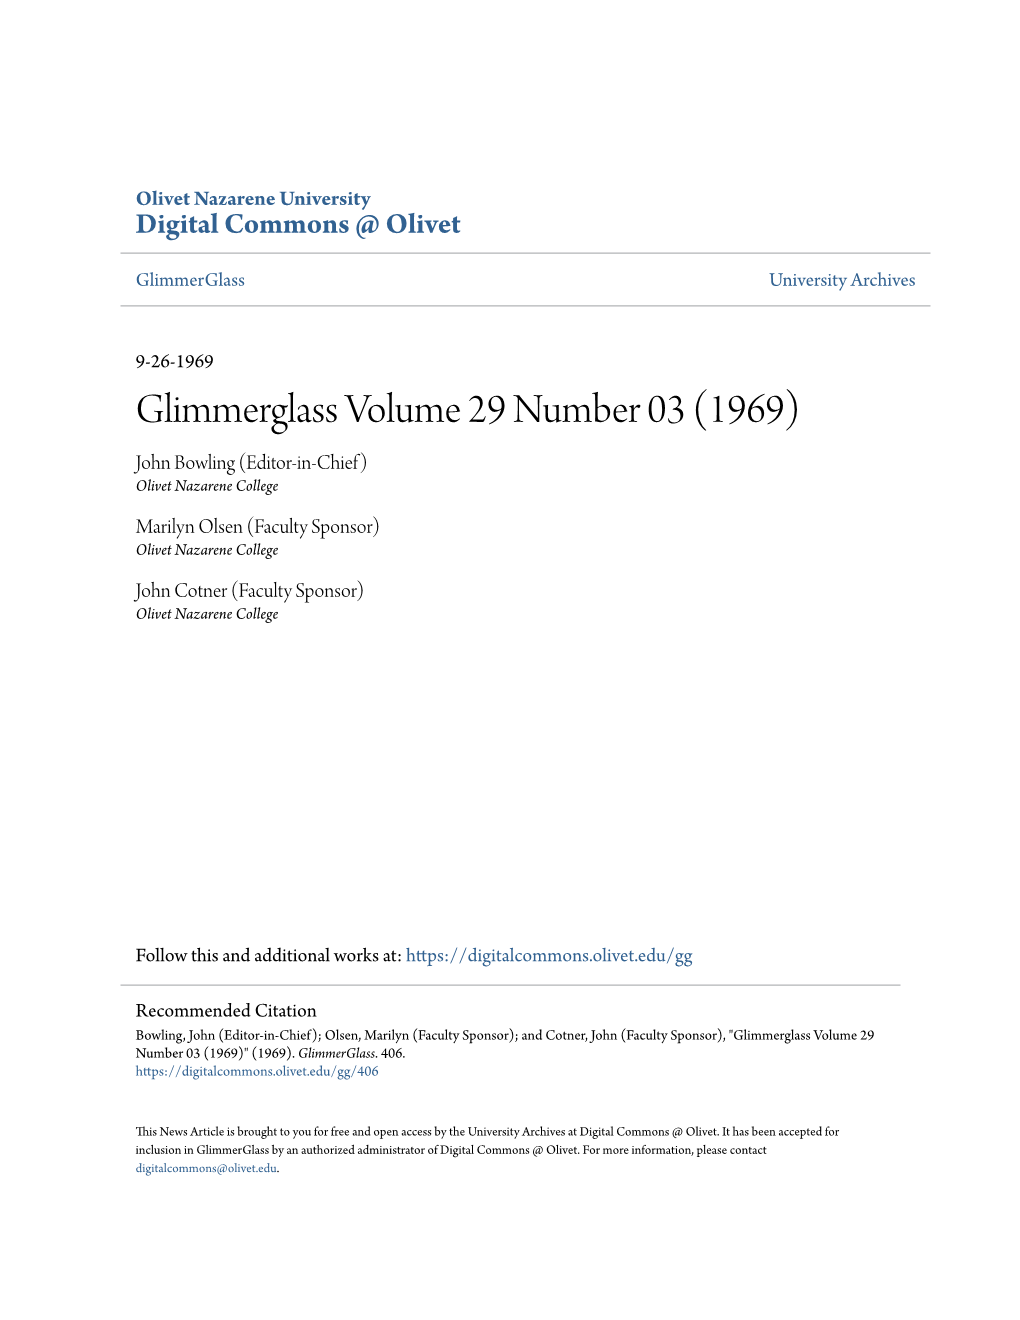 Glimmerglass Volume 29 Number 03 (1969) John Bowling (Editor-In-Chief) Olivet Nazarene College